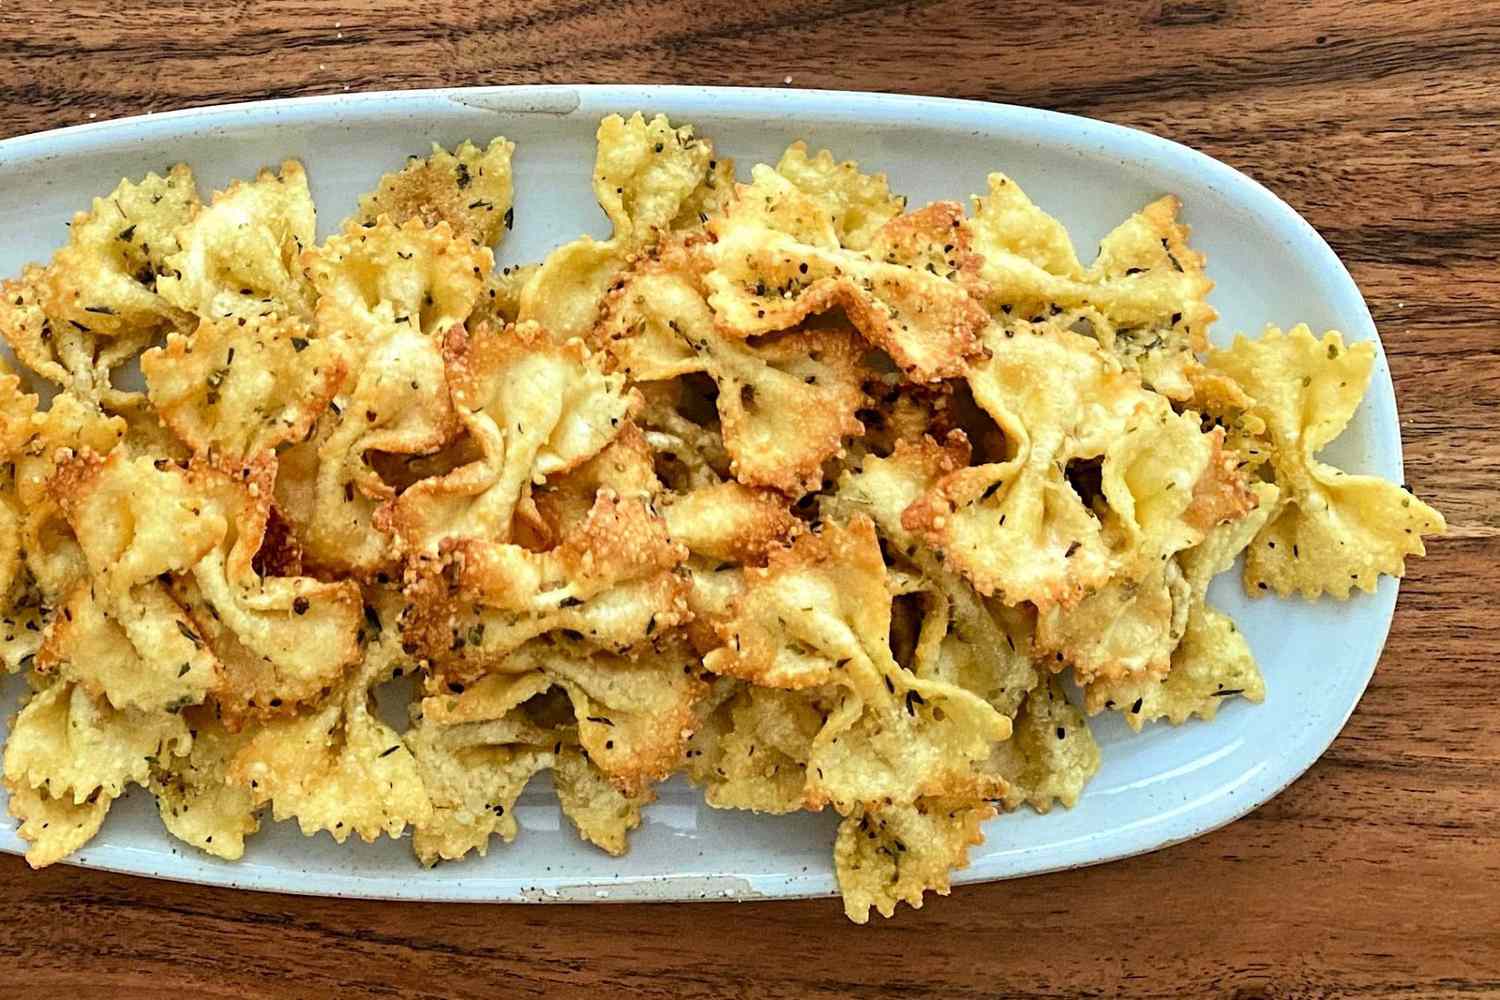 platter of air-fried farfalle pasta coated with Italian seasoning.